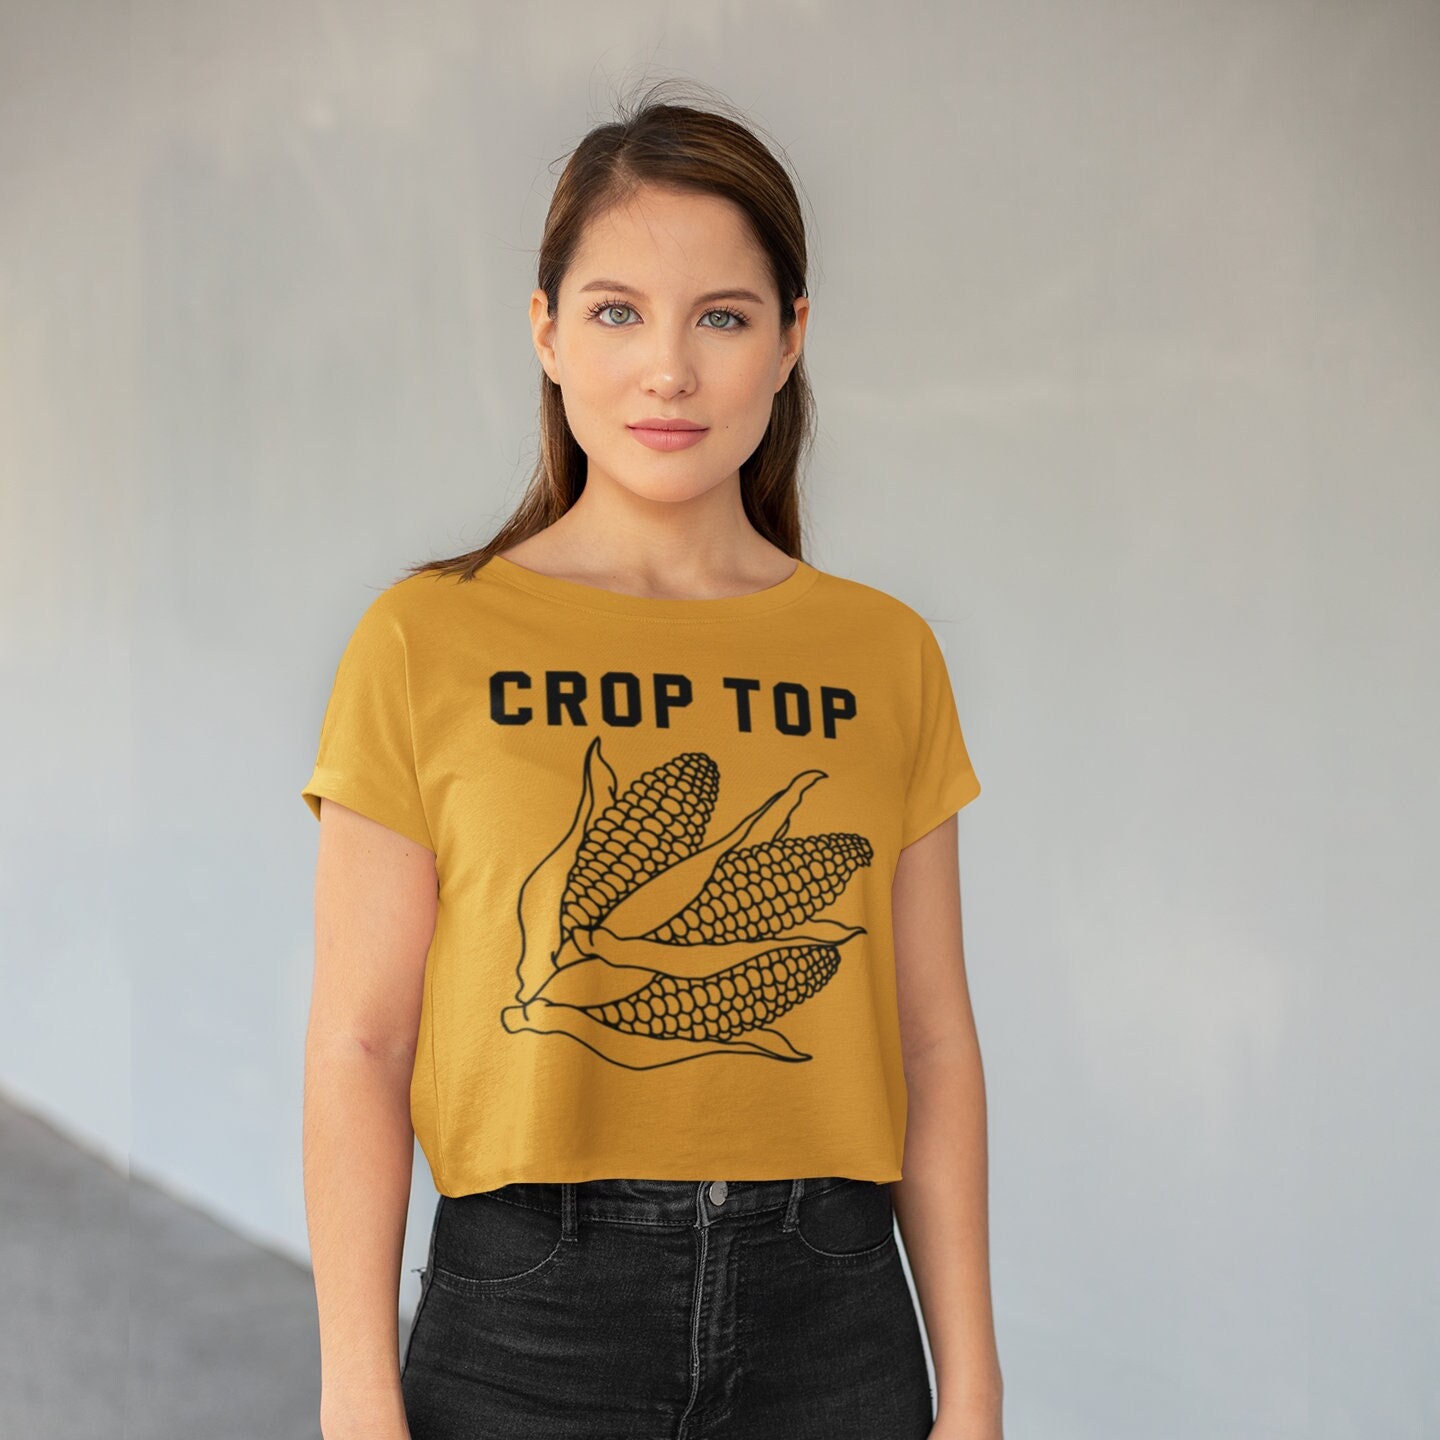 Handmade Top Dahlia Top Kleding Dameskleding Tops & T-shirts Croptops & Bandeautops Croptops 